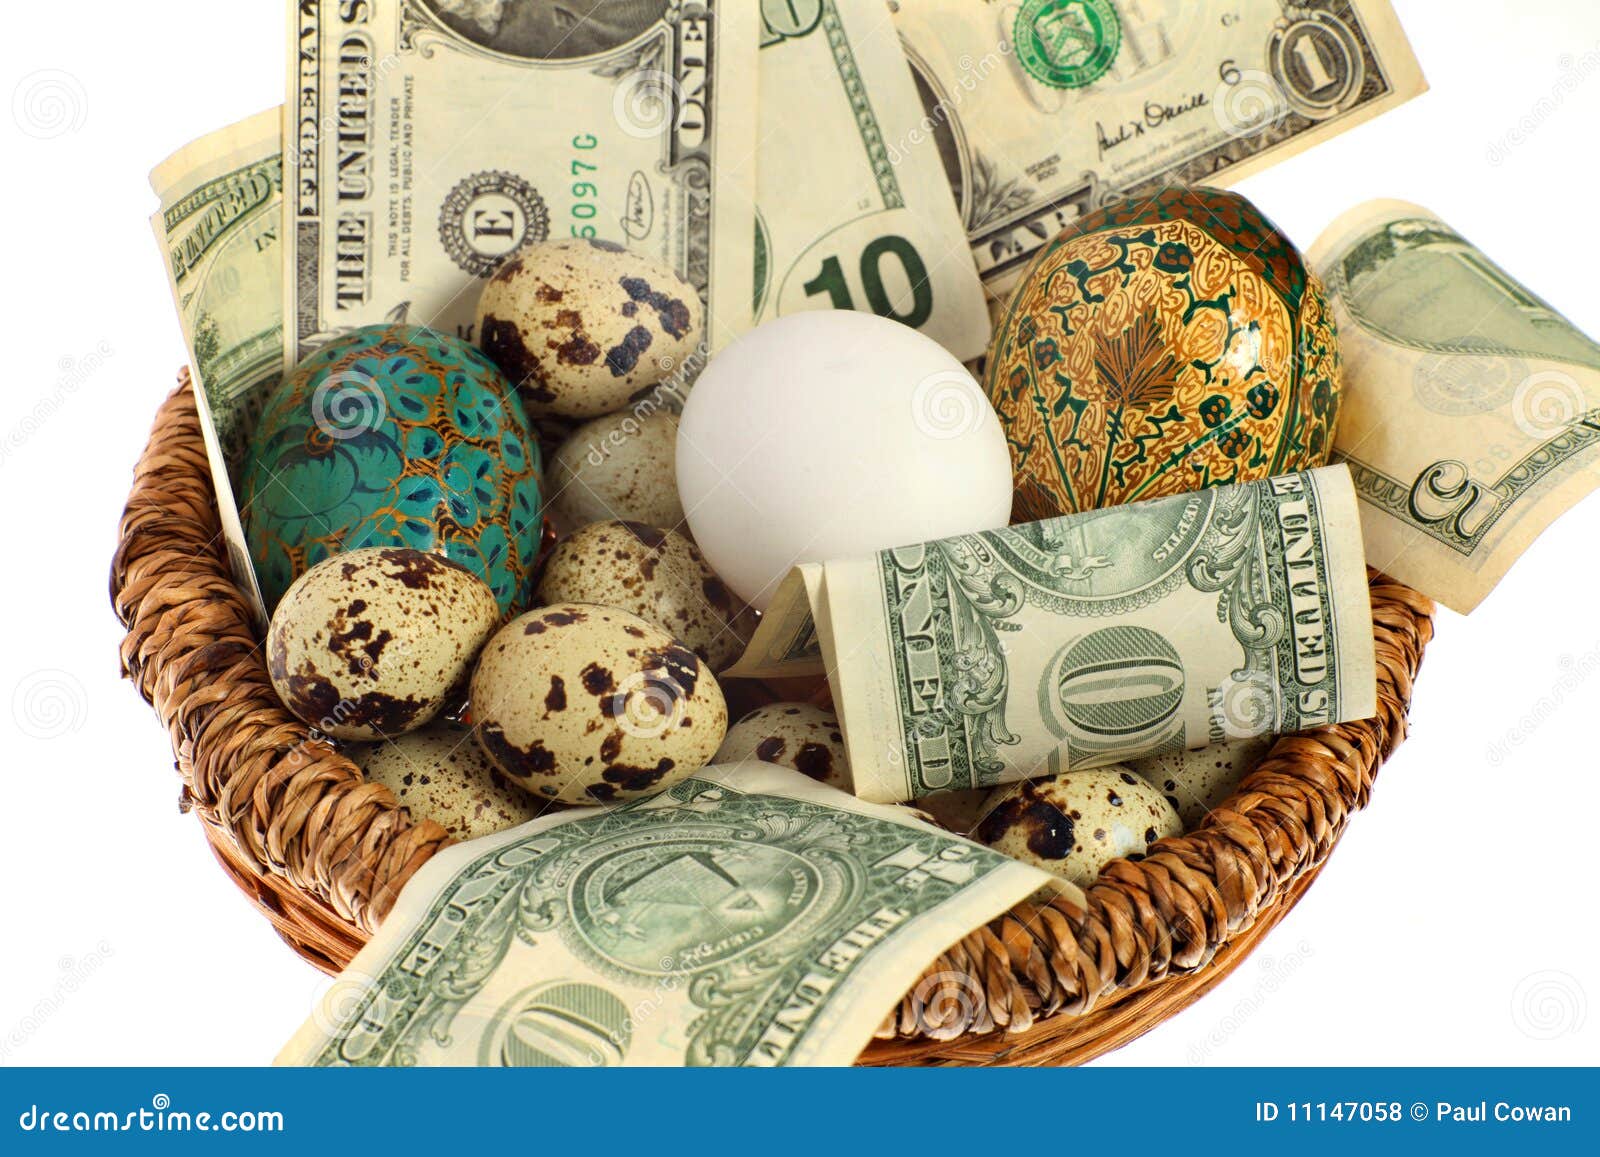 Image result for april eggs money